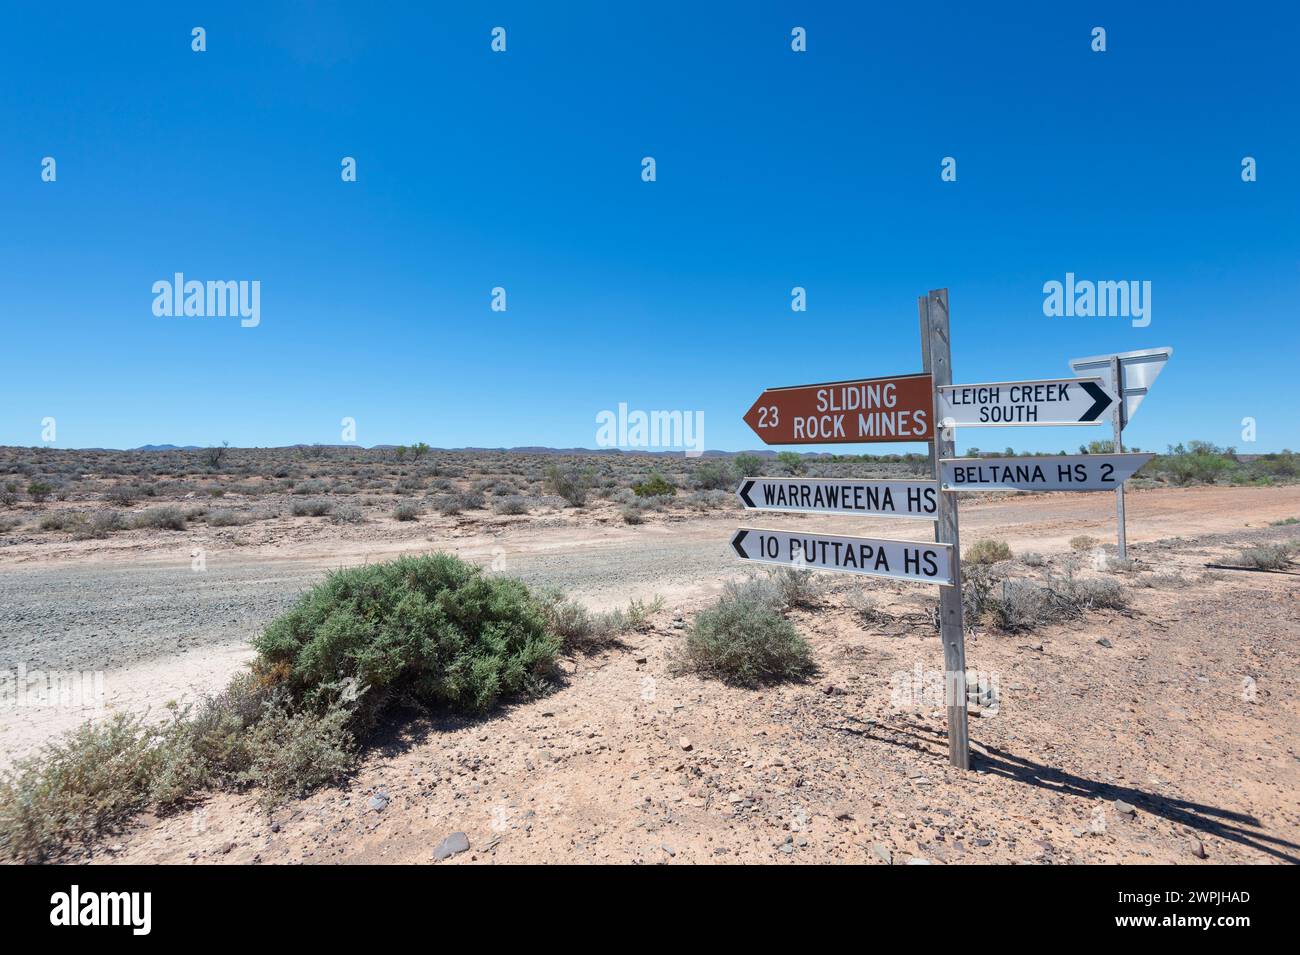 Road signs with destination and distances along the Strzelecki Track, South Australia, SA, Australia Stock Photo